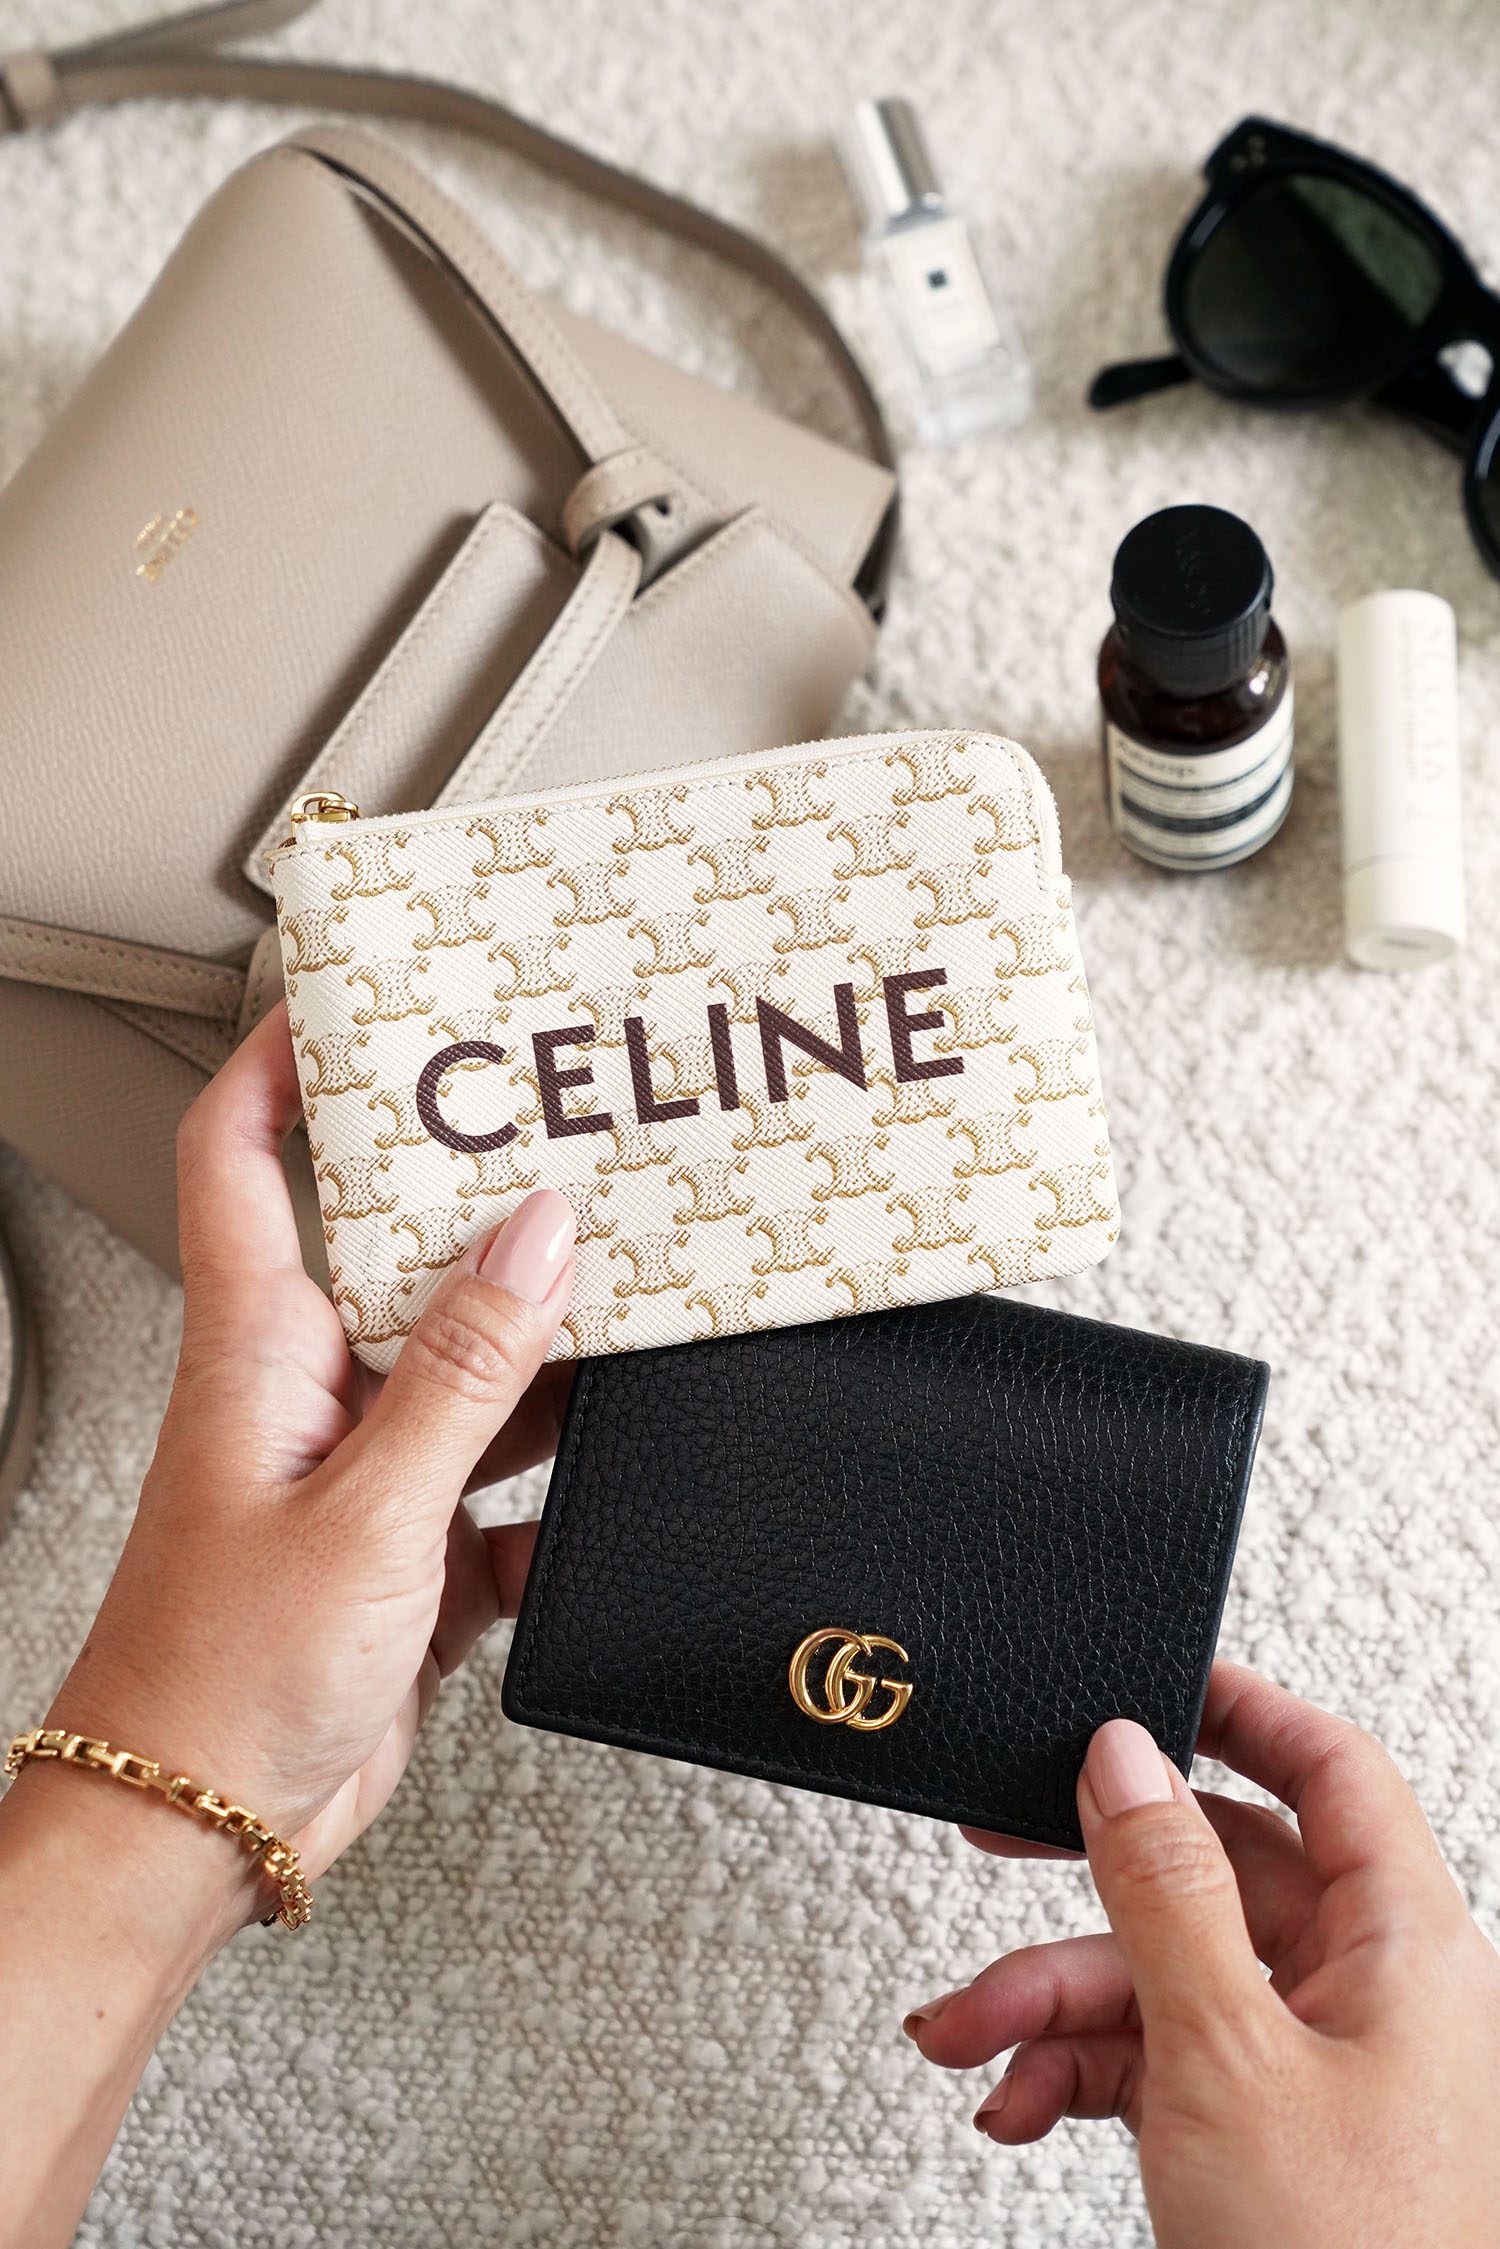 Celine Pico Belt Bag Review - The Beauty Look Book